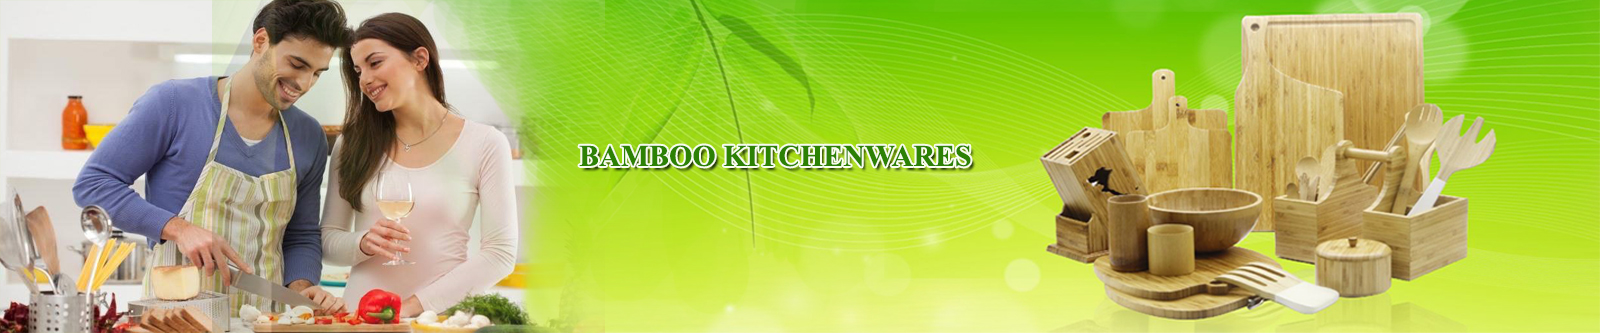 Bamboo Kitchenwares